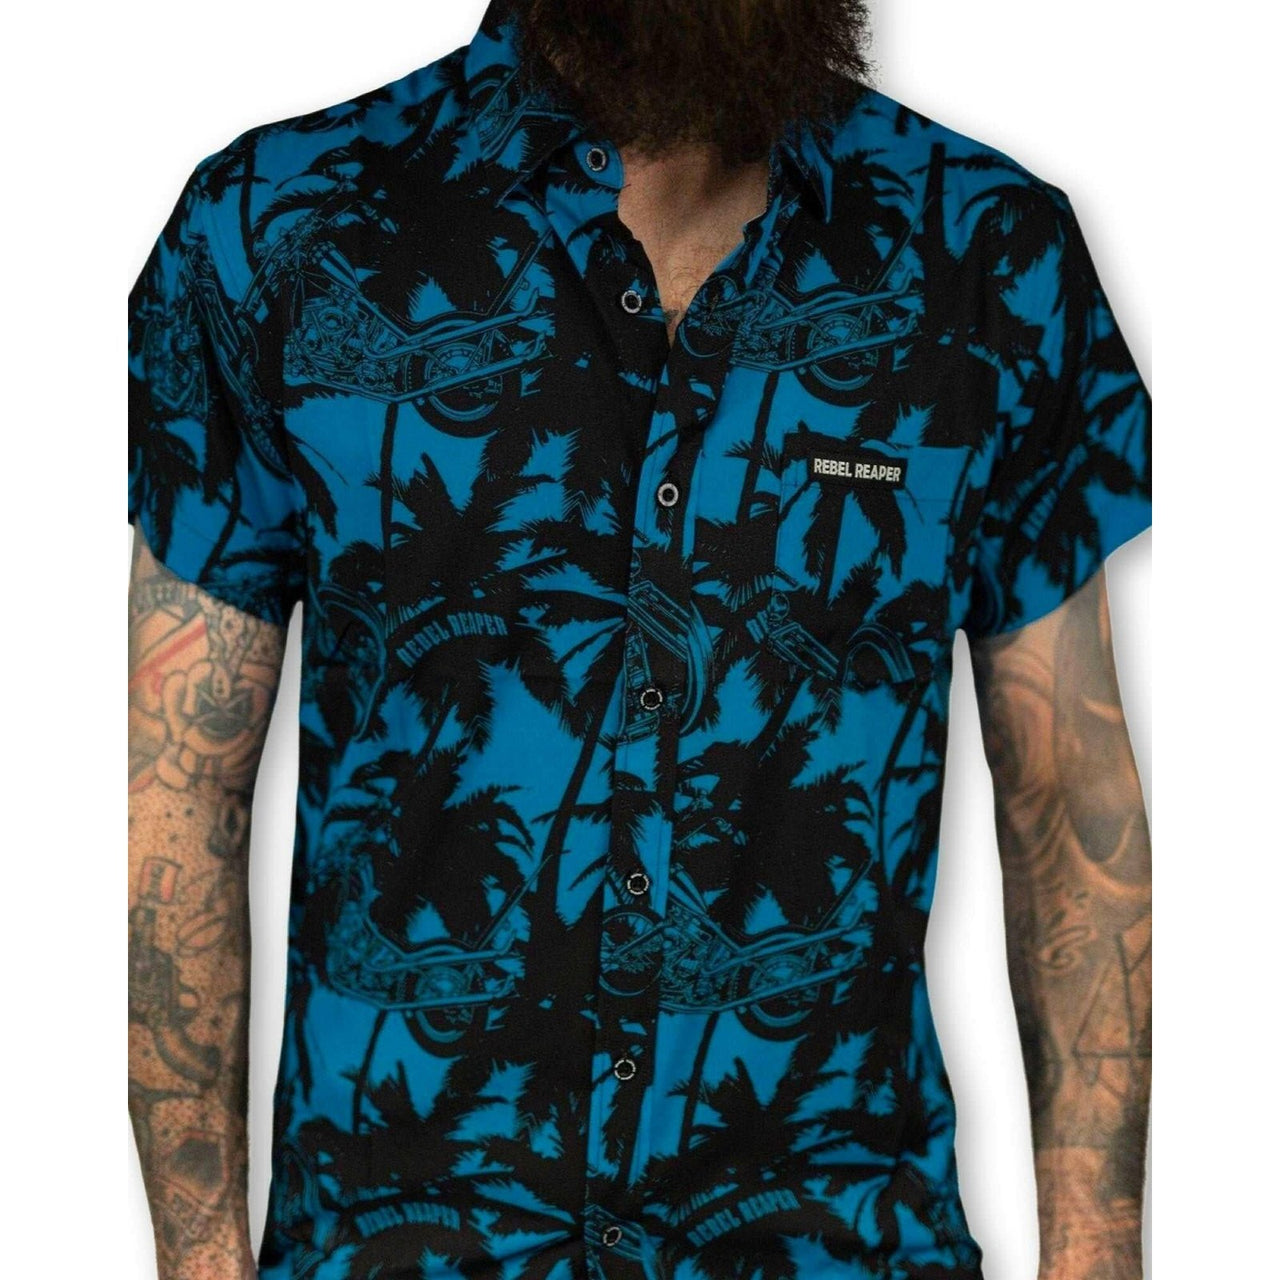 Blue Chopper Vice Shirt - Rebel Reaper Clothing Company Button Up Shirt Men's